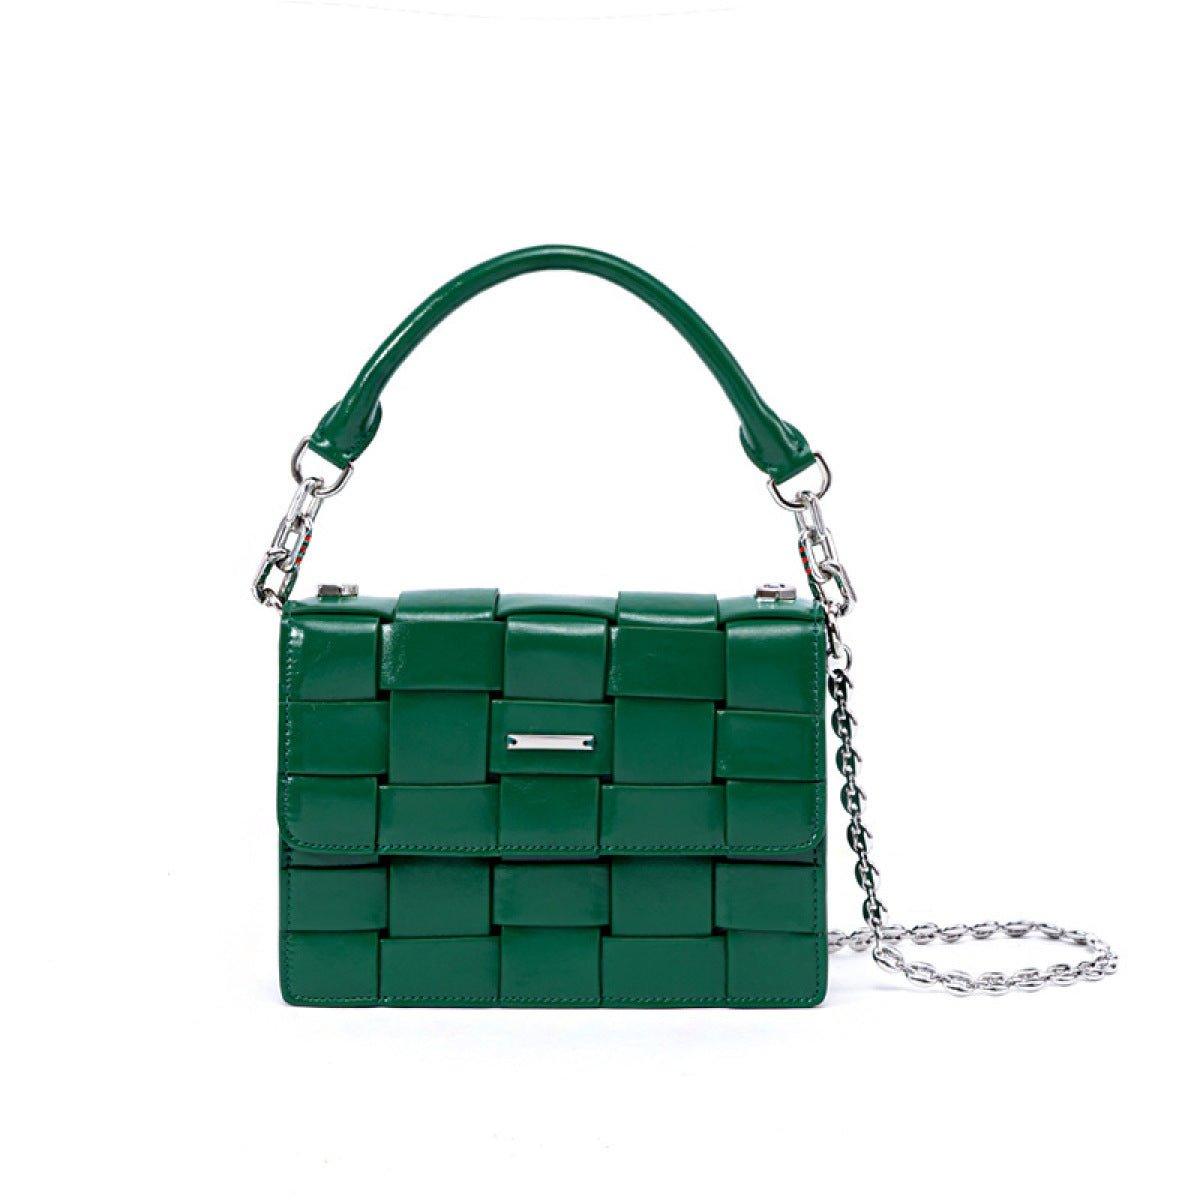 Woven Design Handbag Shoulder Bag With Chain